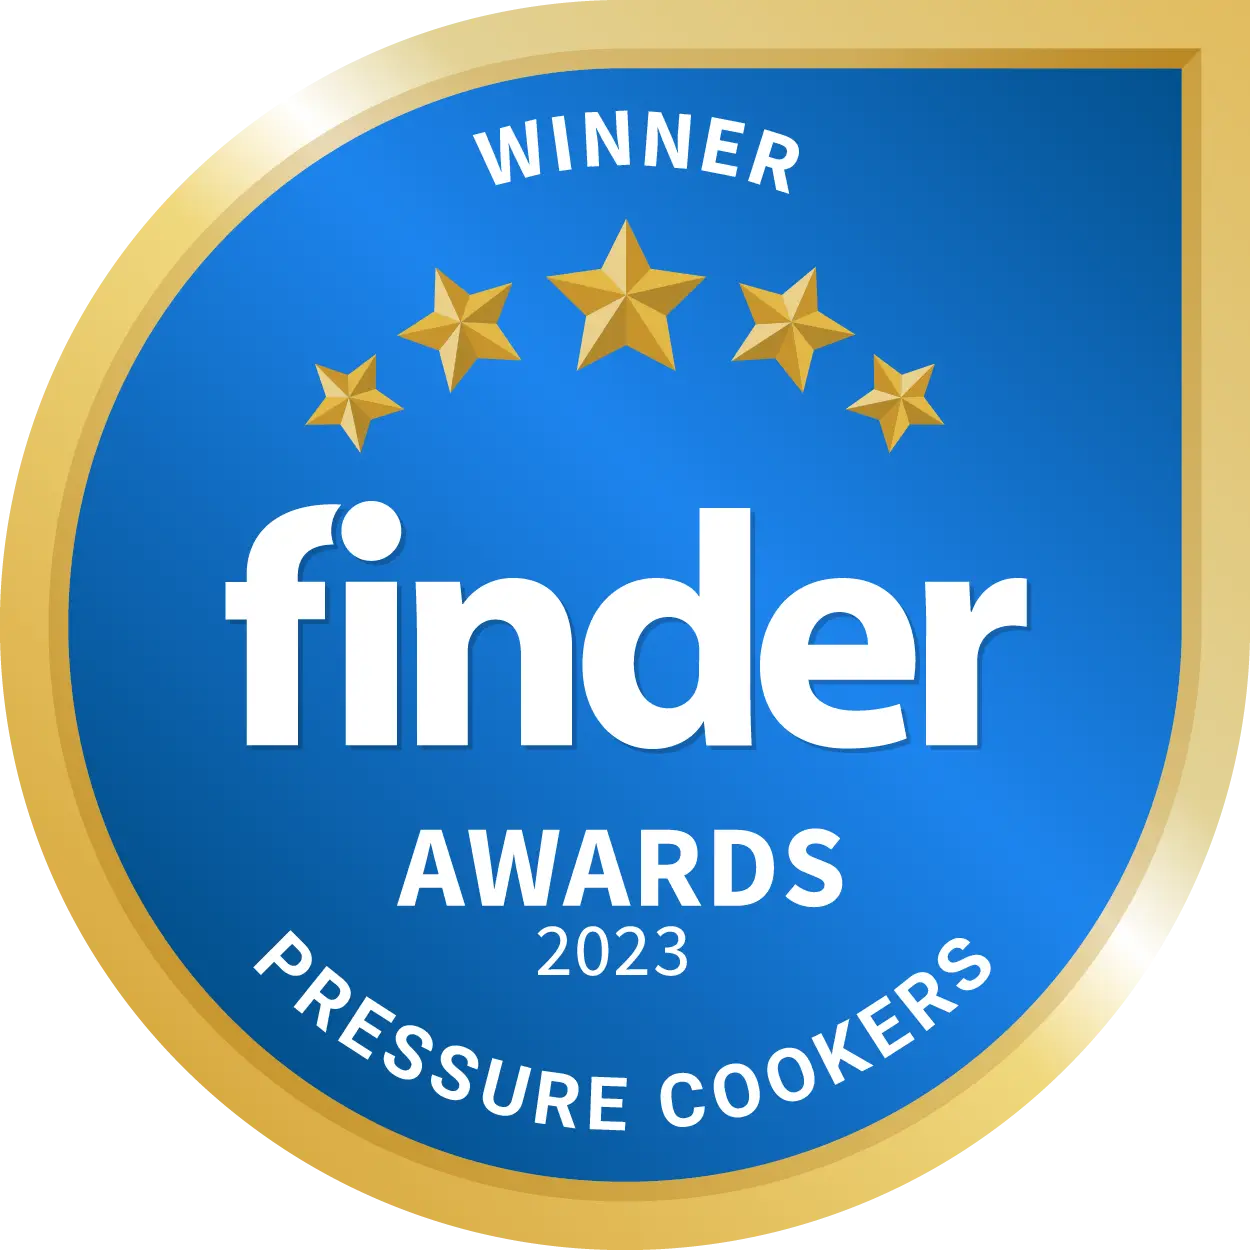 Best pressure cooker brand